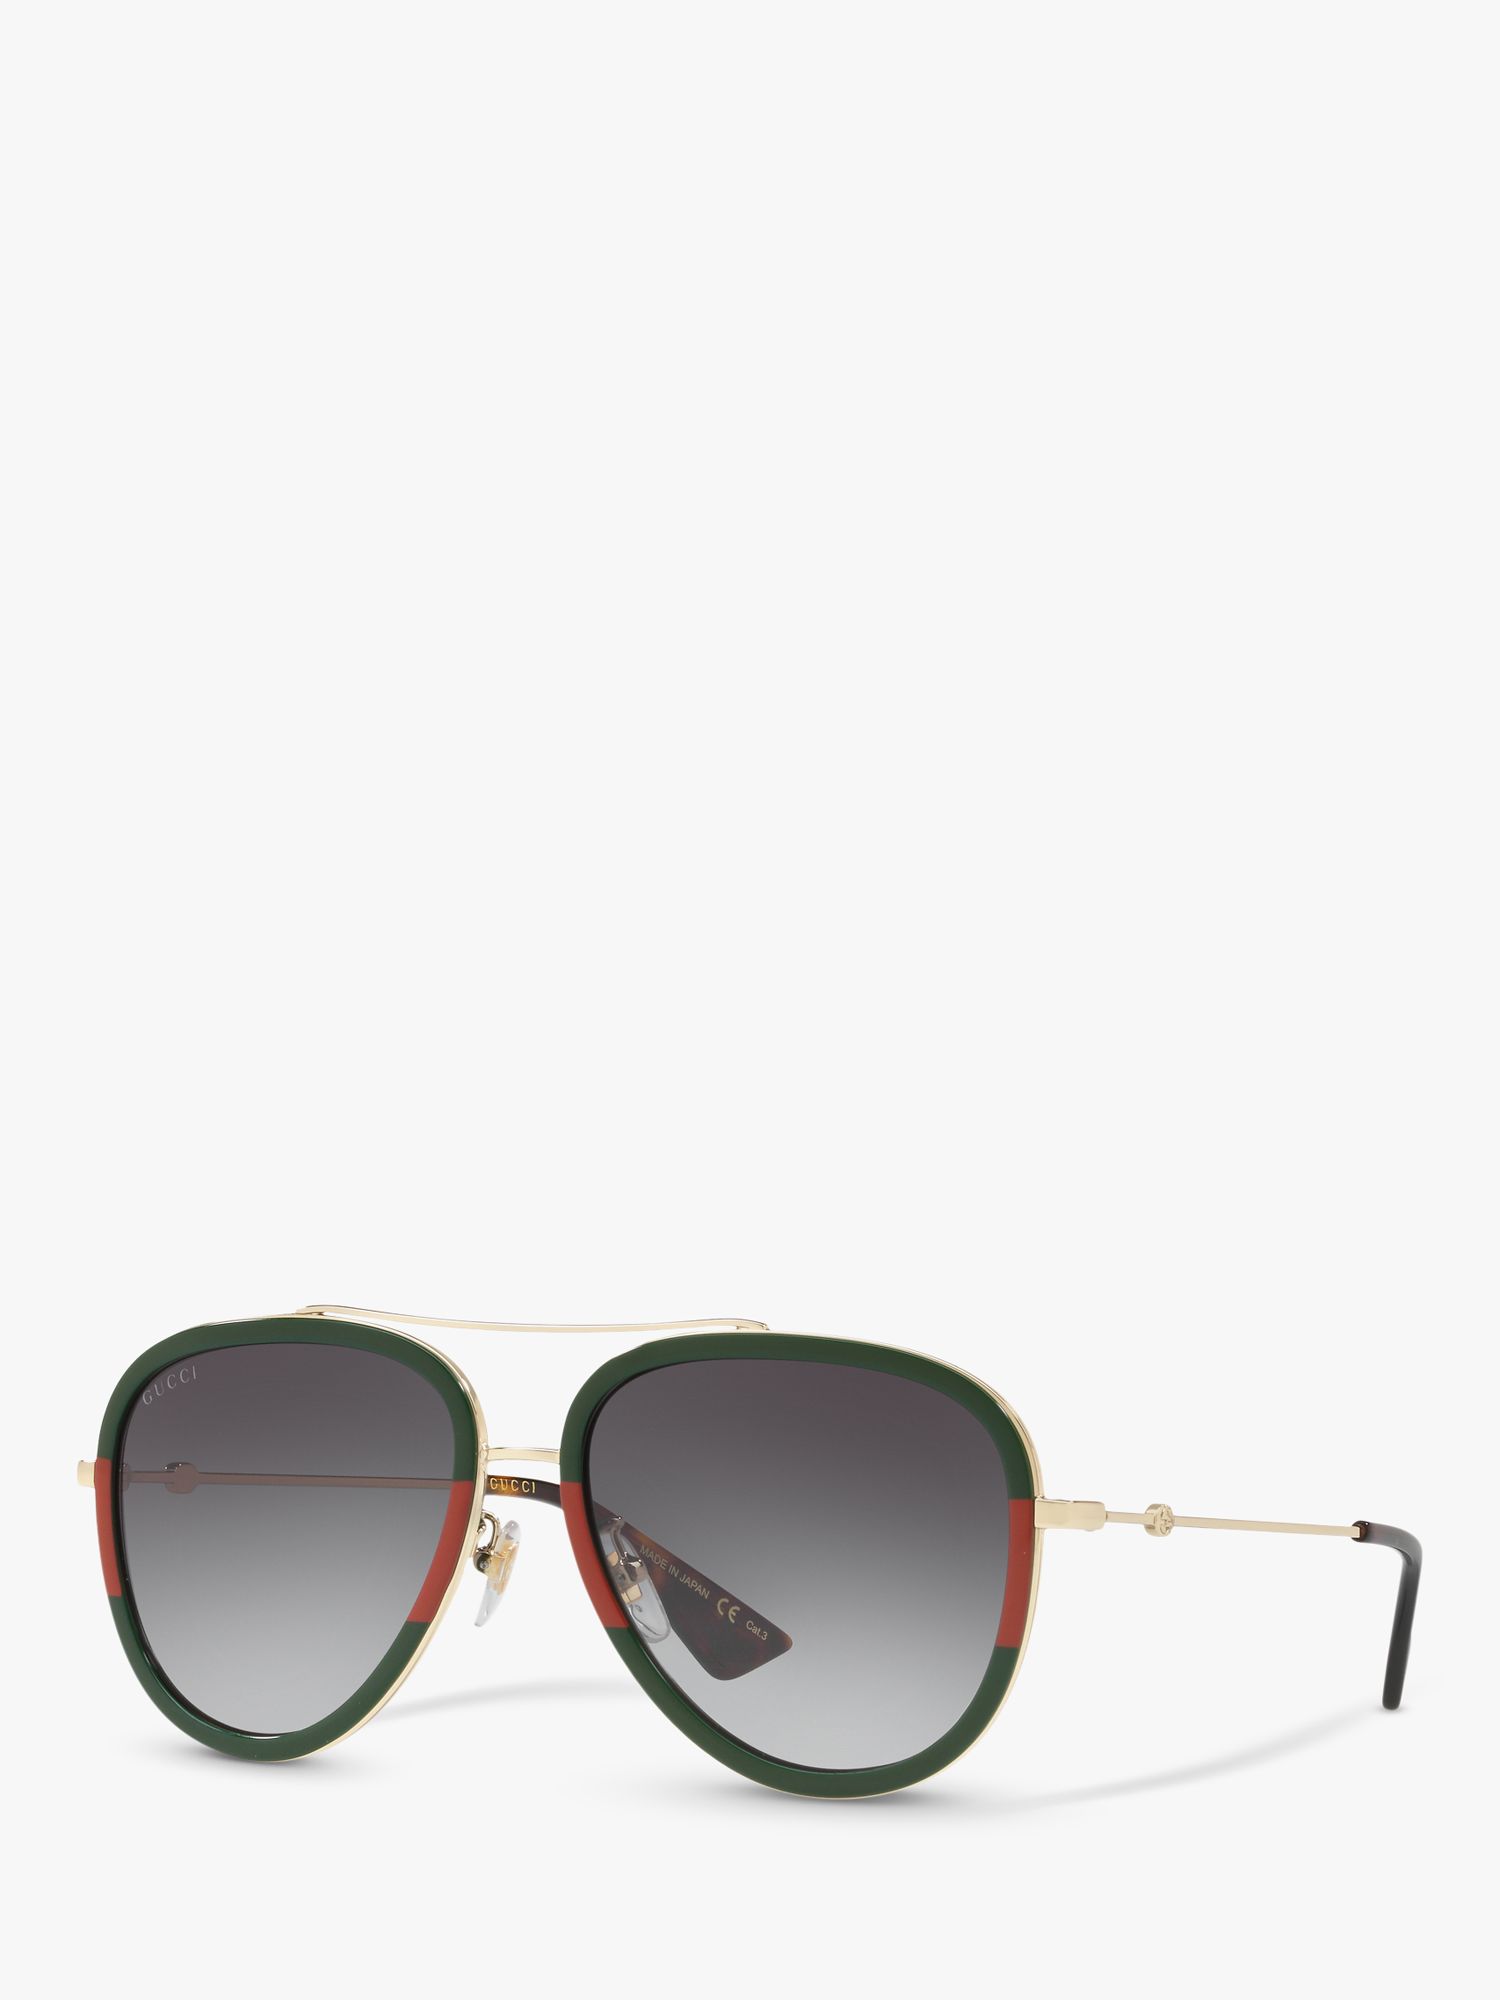 Gucci GG0062S Aviator Sunglasses, Multi/Grey Gradient at John 